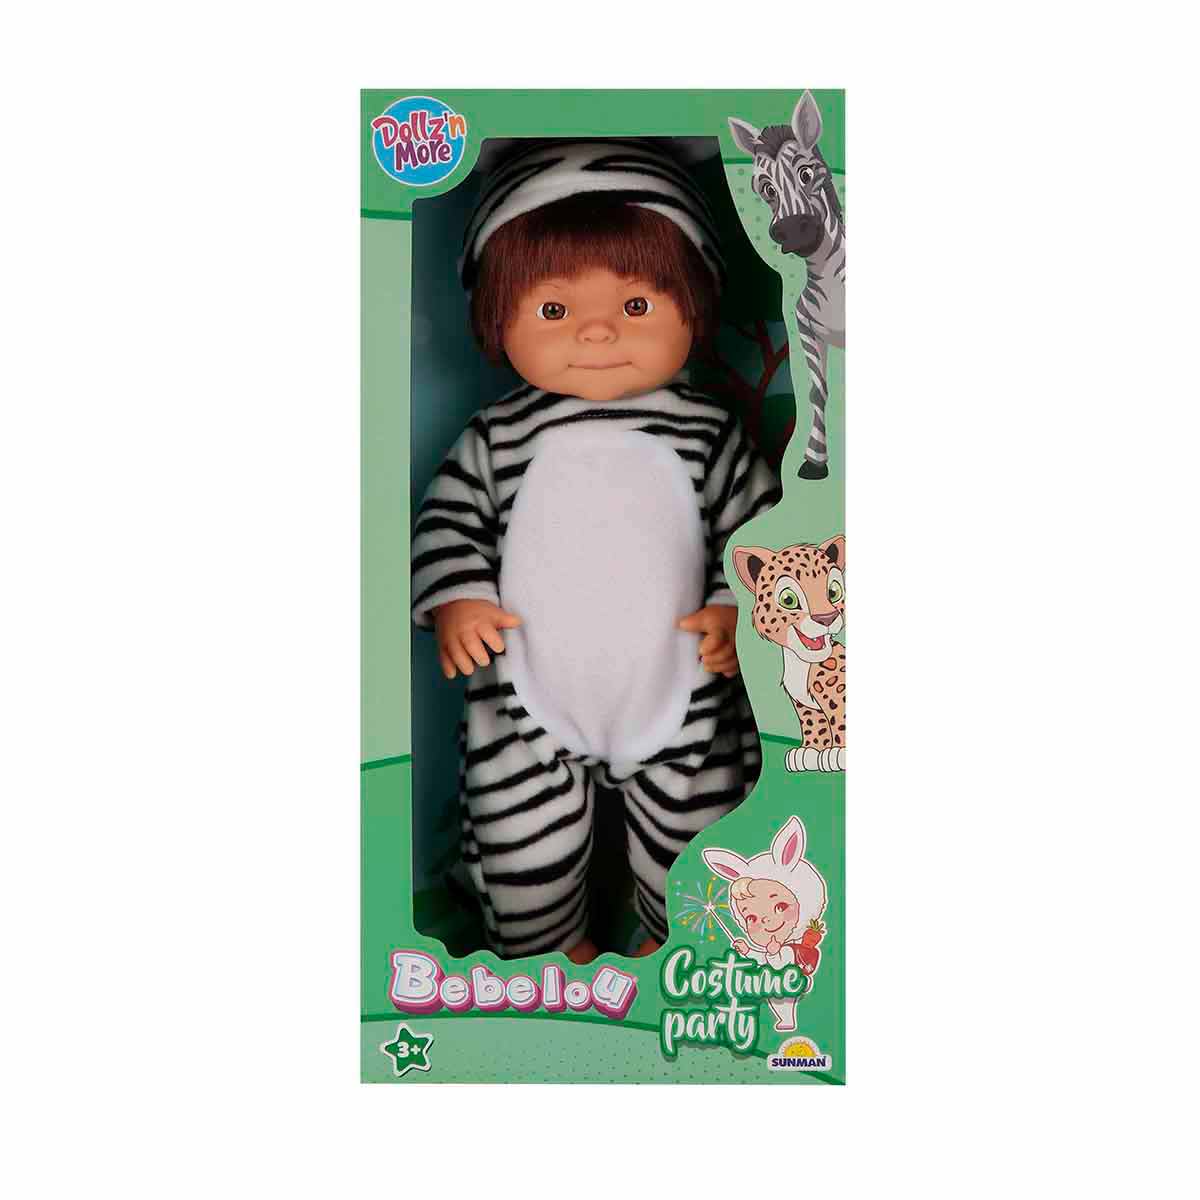 Papusa Bebelou in costum de zebra, Dollz n More, 40 cm Bebelou imagine 2022 protejamcopilaria.ro